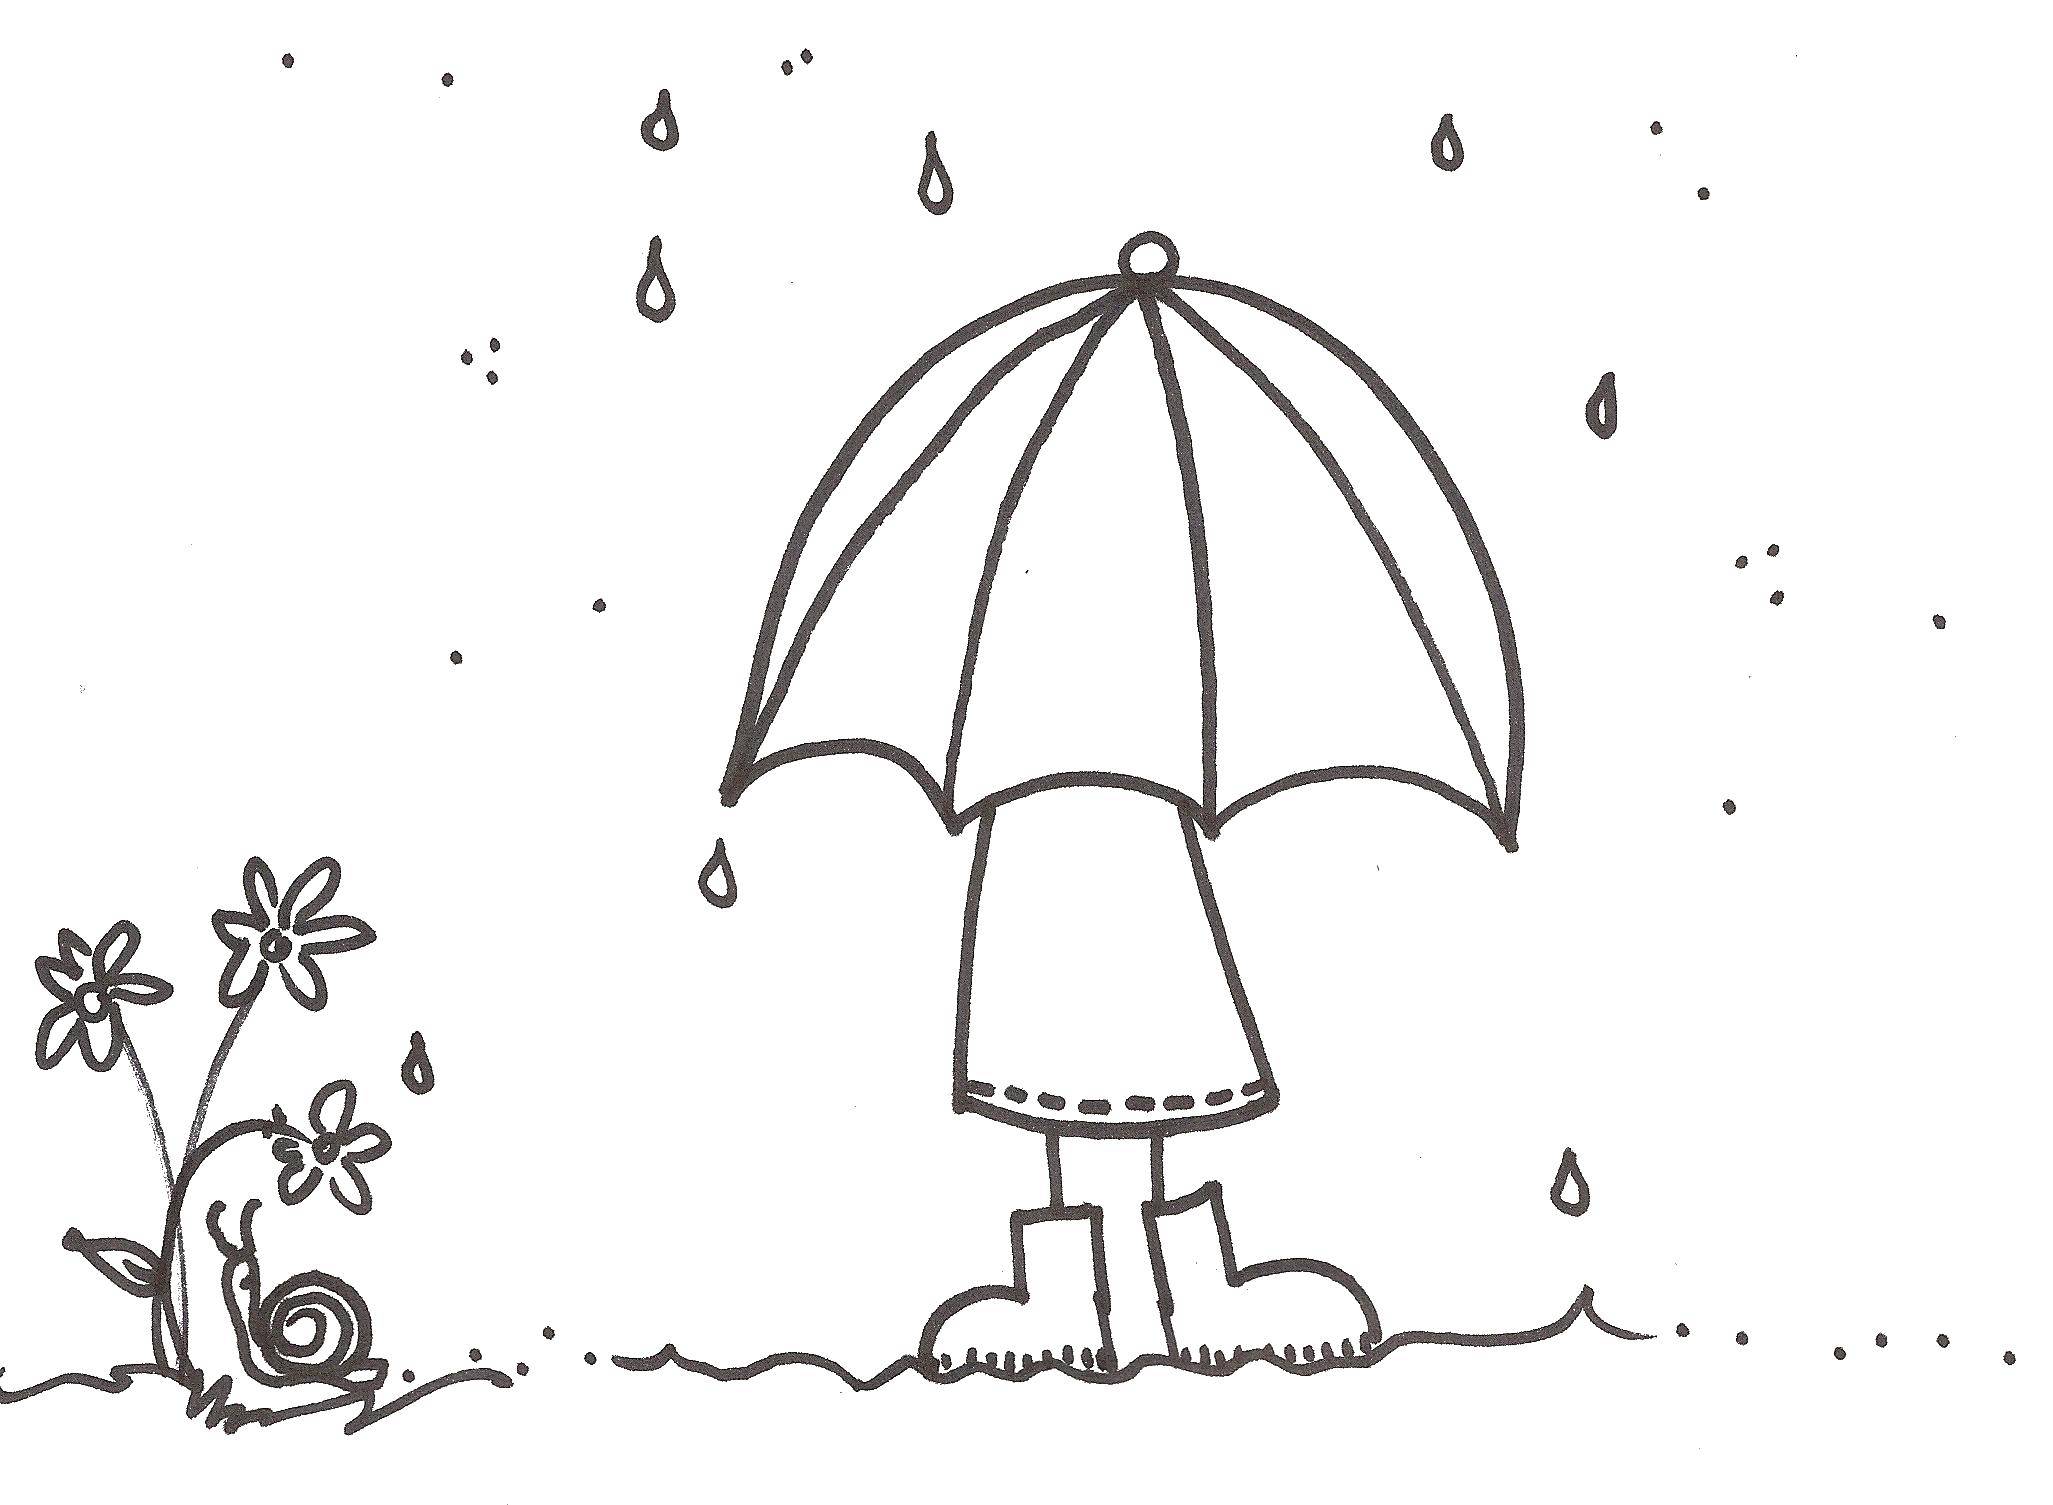 Coloring The girl with the umbrella.. Category Rain. Tags:  rain, umbrella, girl.